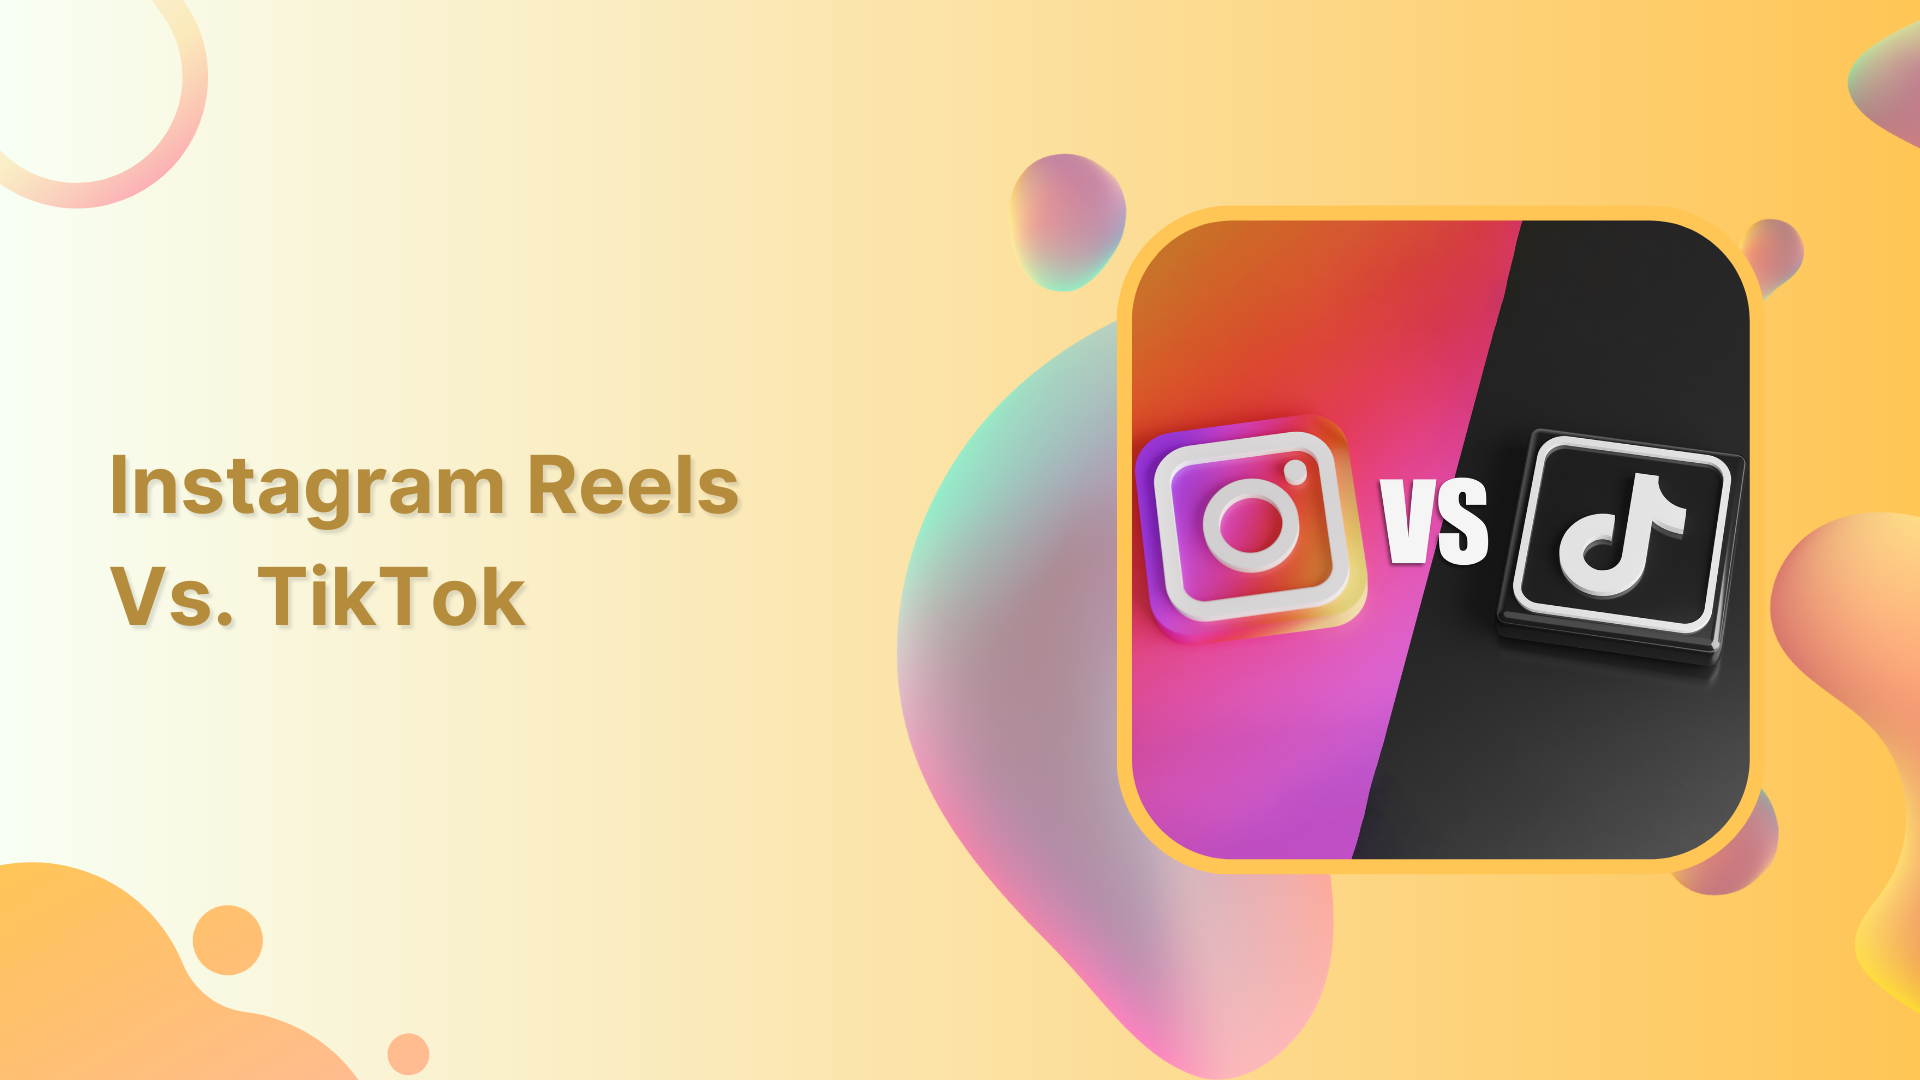 Instagram Reels Vs. TikTok: Which is Better for Content Marketing?